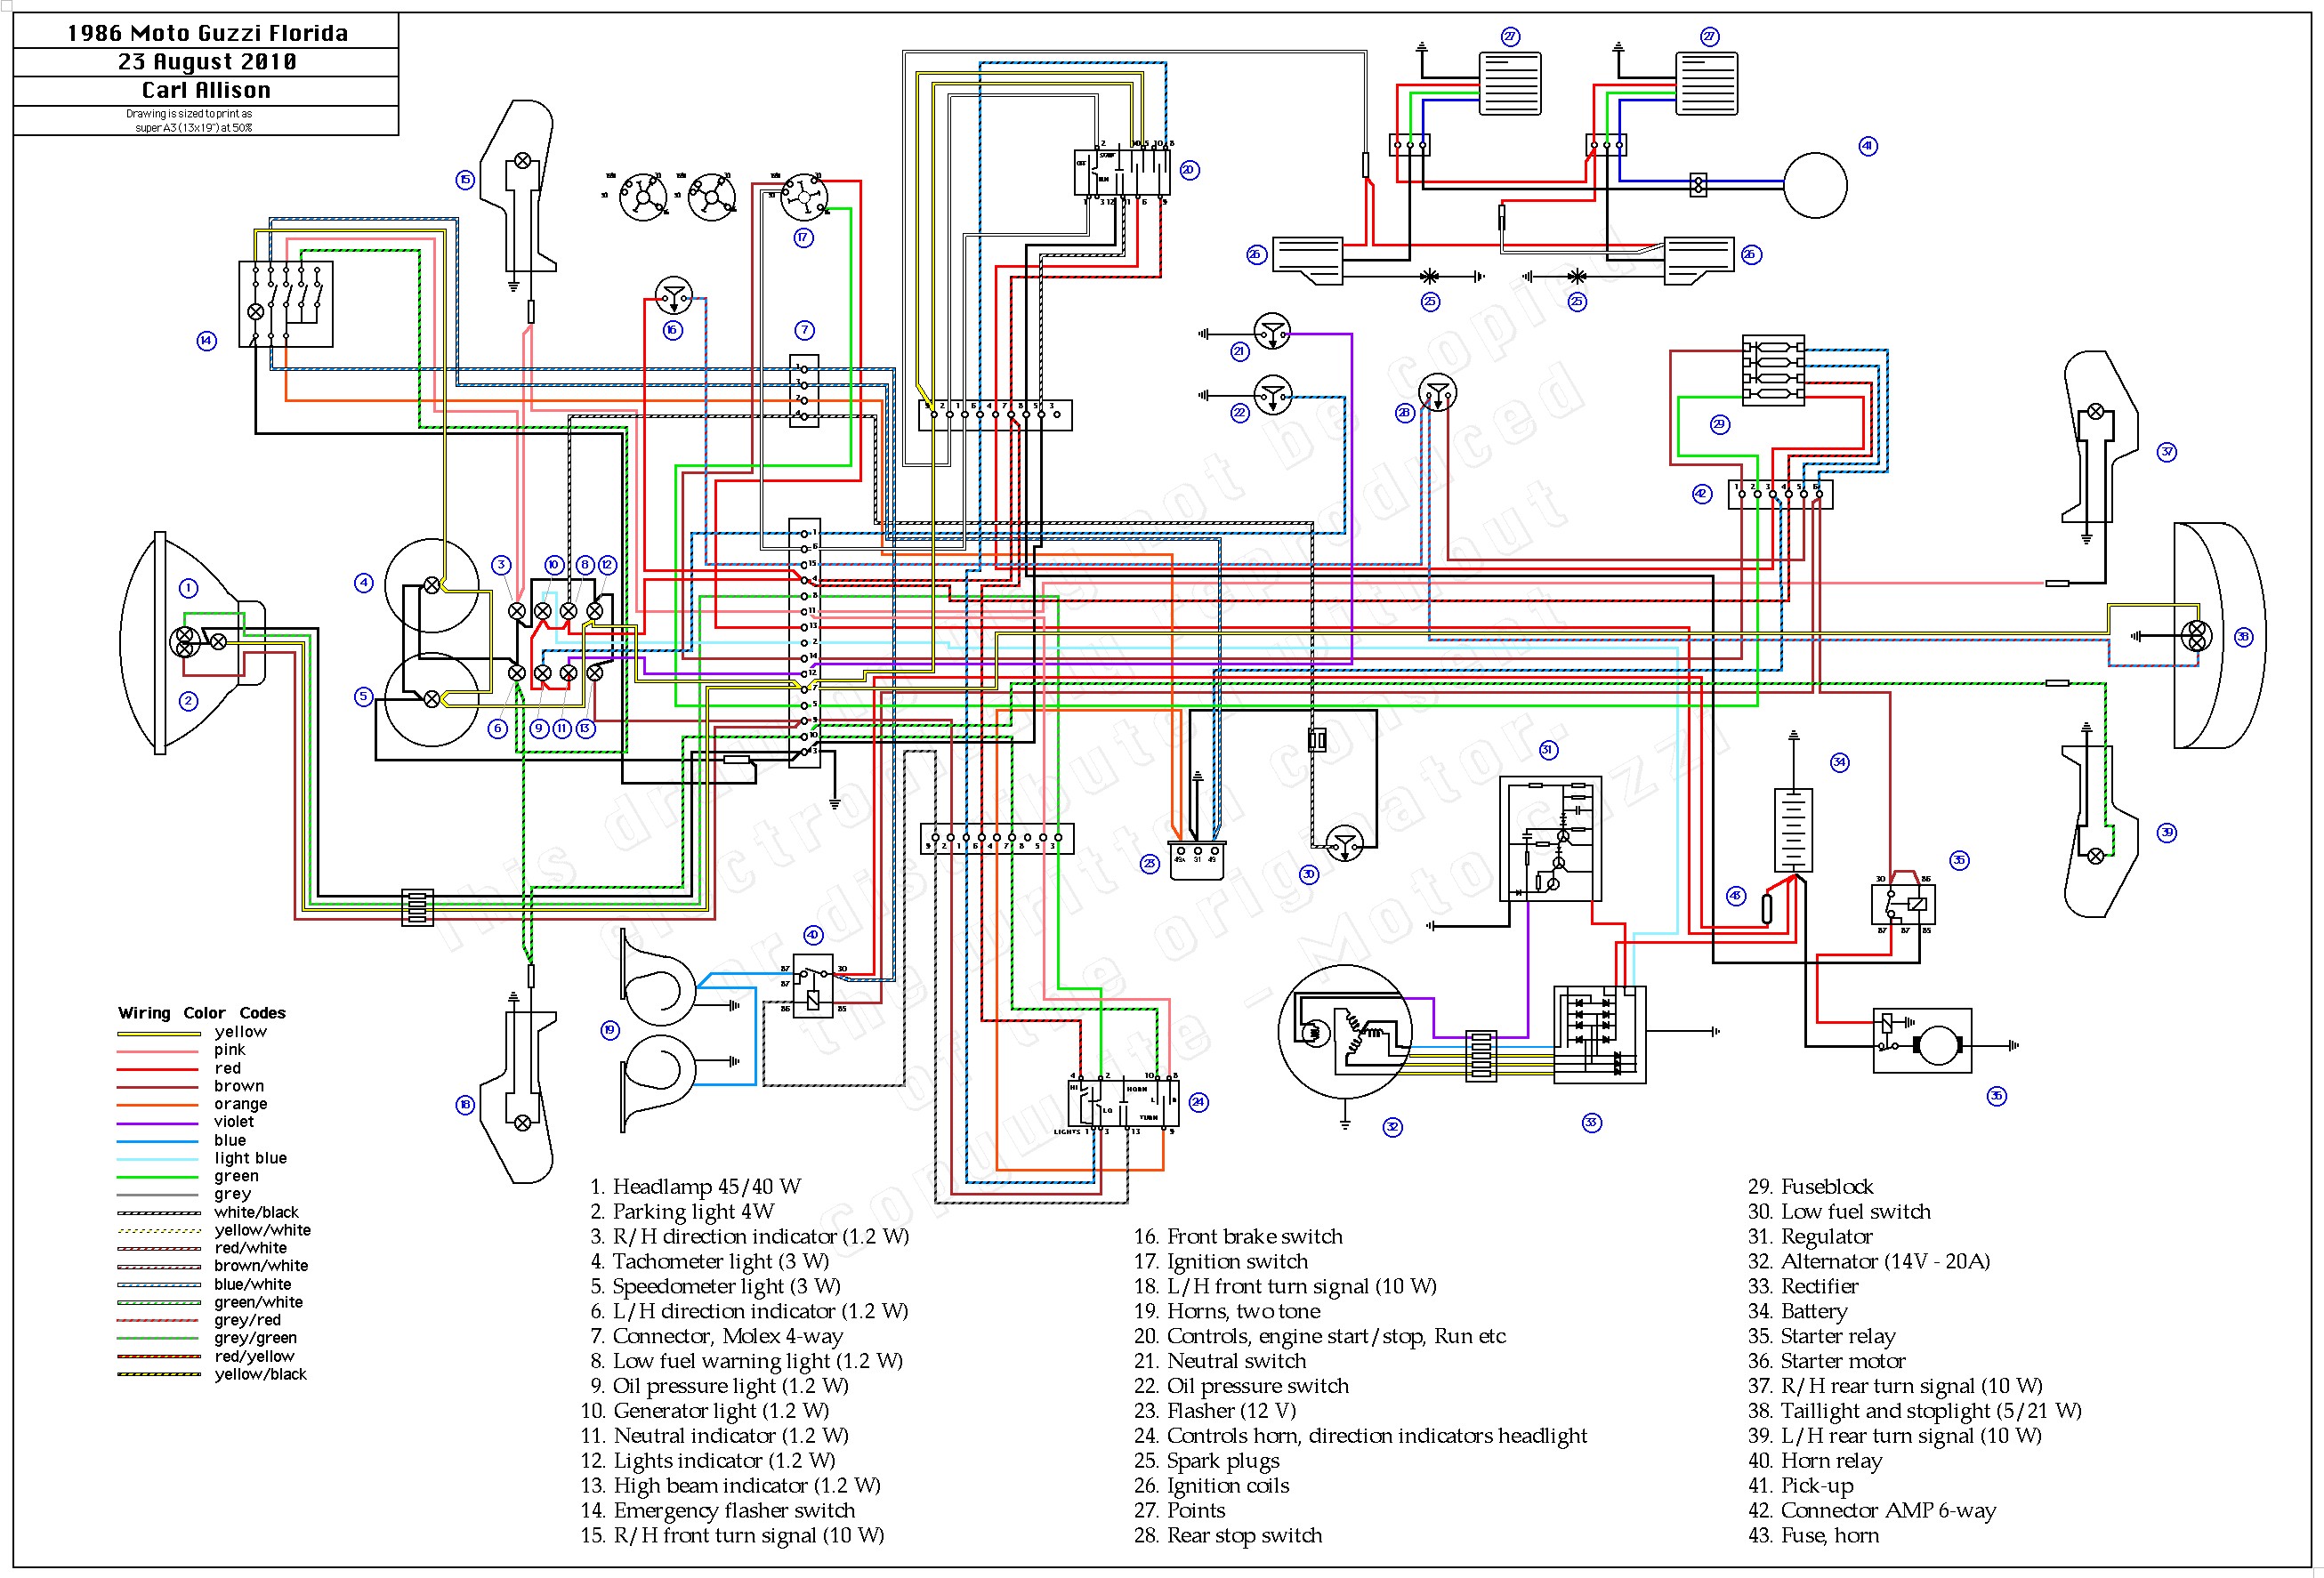 1988 Suzuki Samurai Ignition Switch Wiring Diagrahm | Wiring Diagram Image